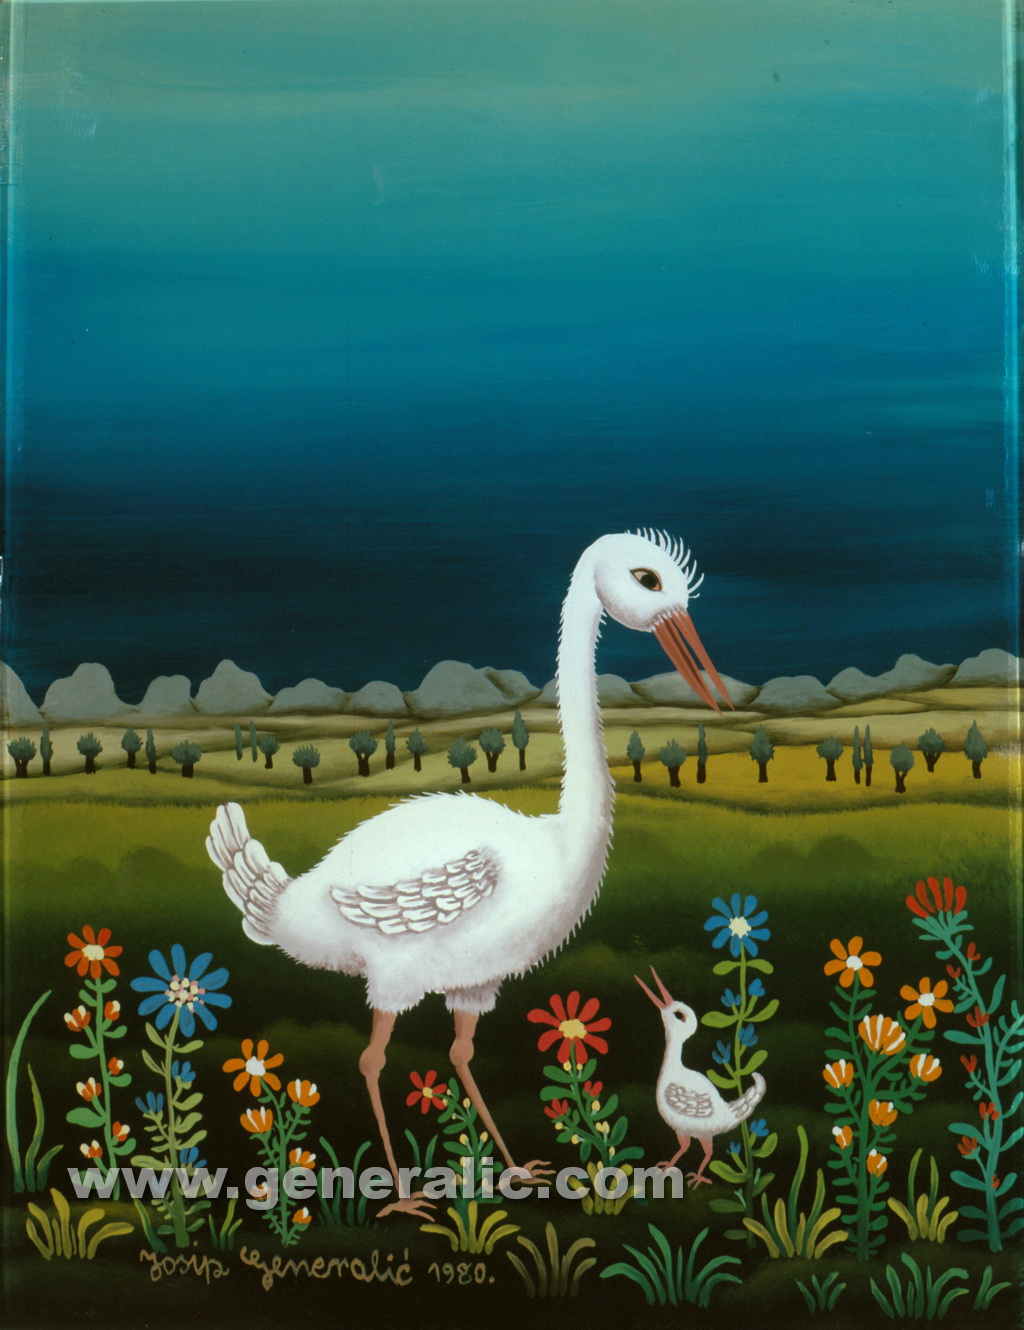 Josip Generalic, 1980, Two white birds, oil on glass, 19x12 cm